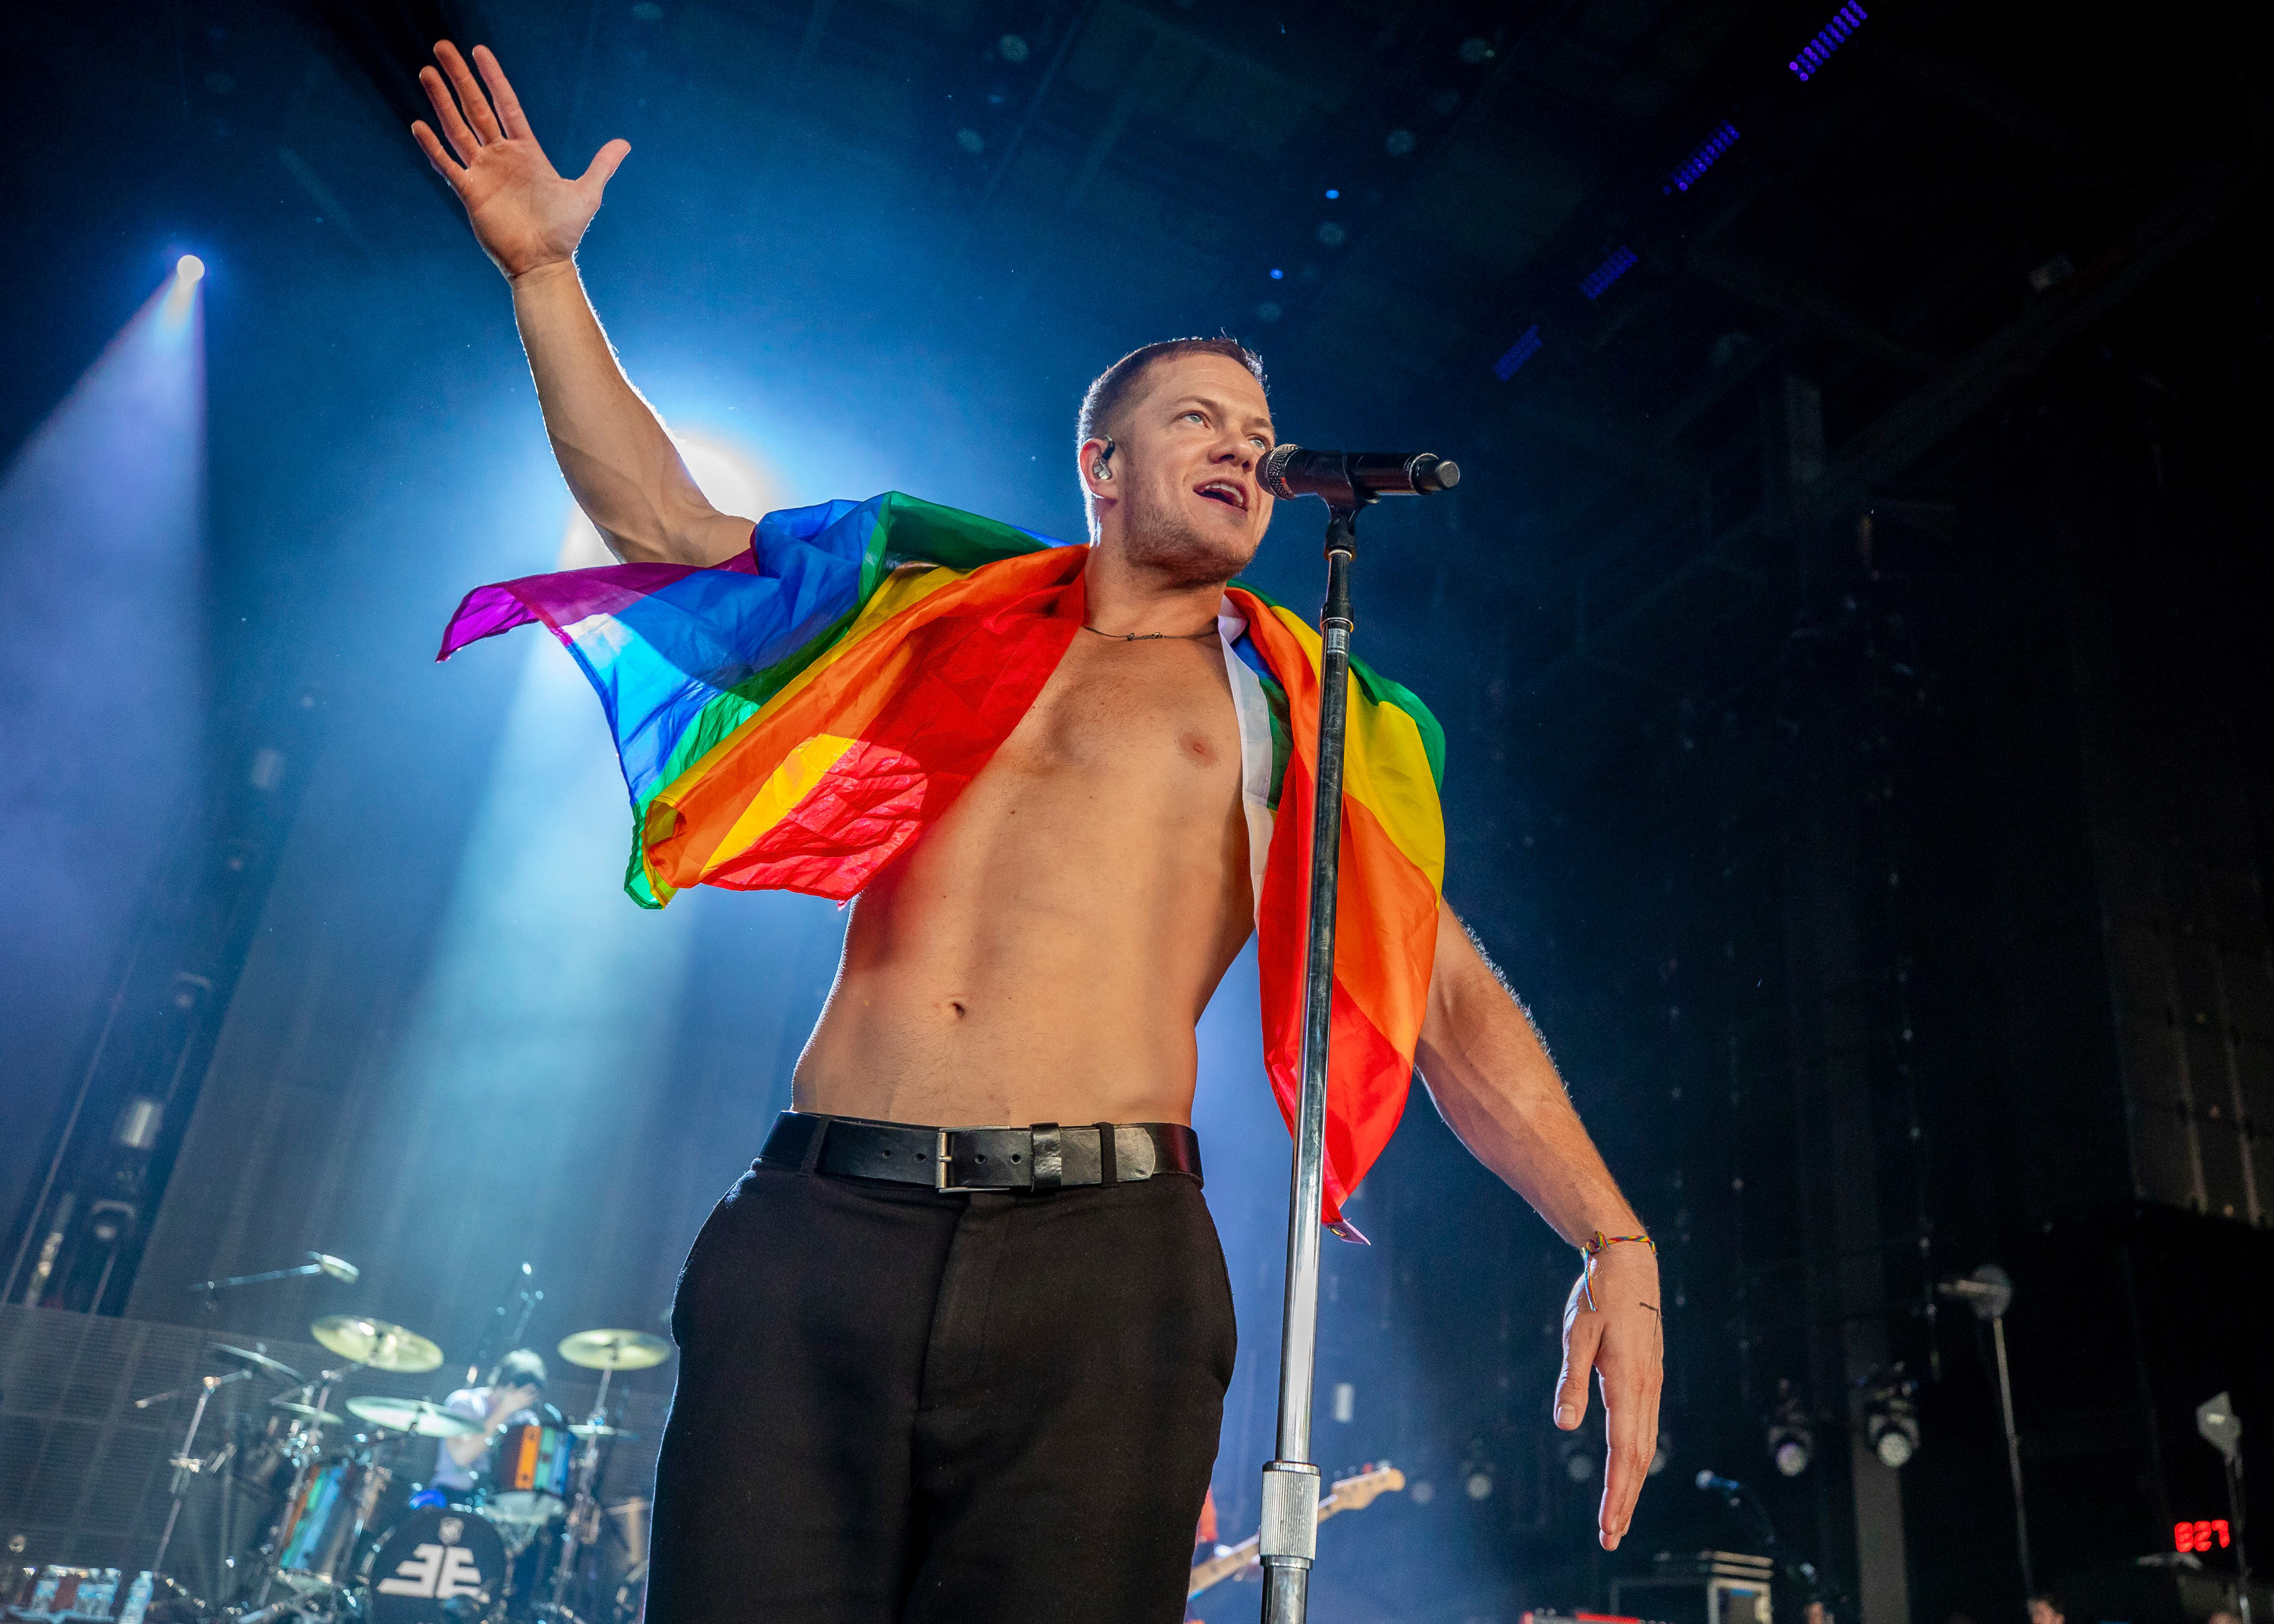 Dan singing shirtless with the Pride flag draped across his shoulders